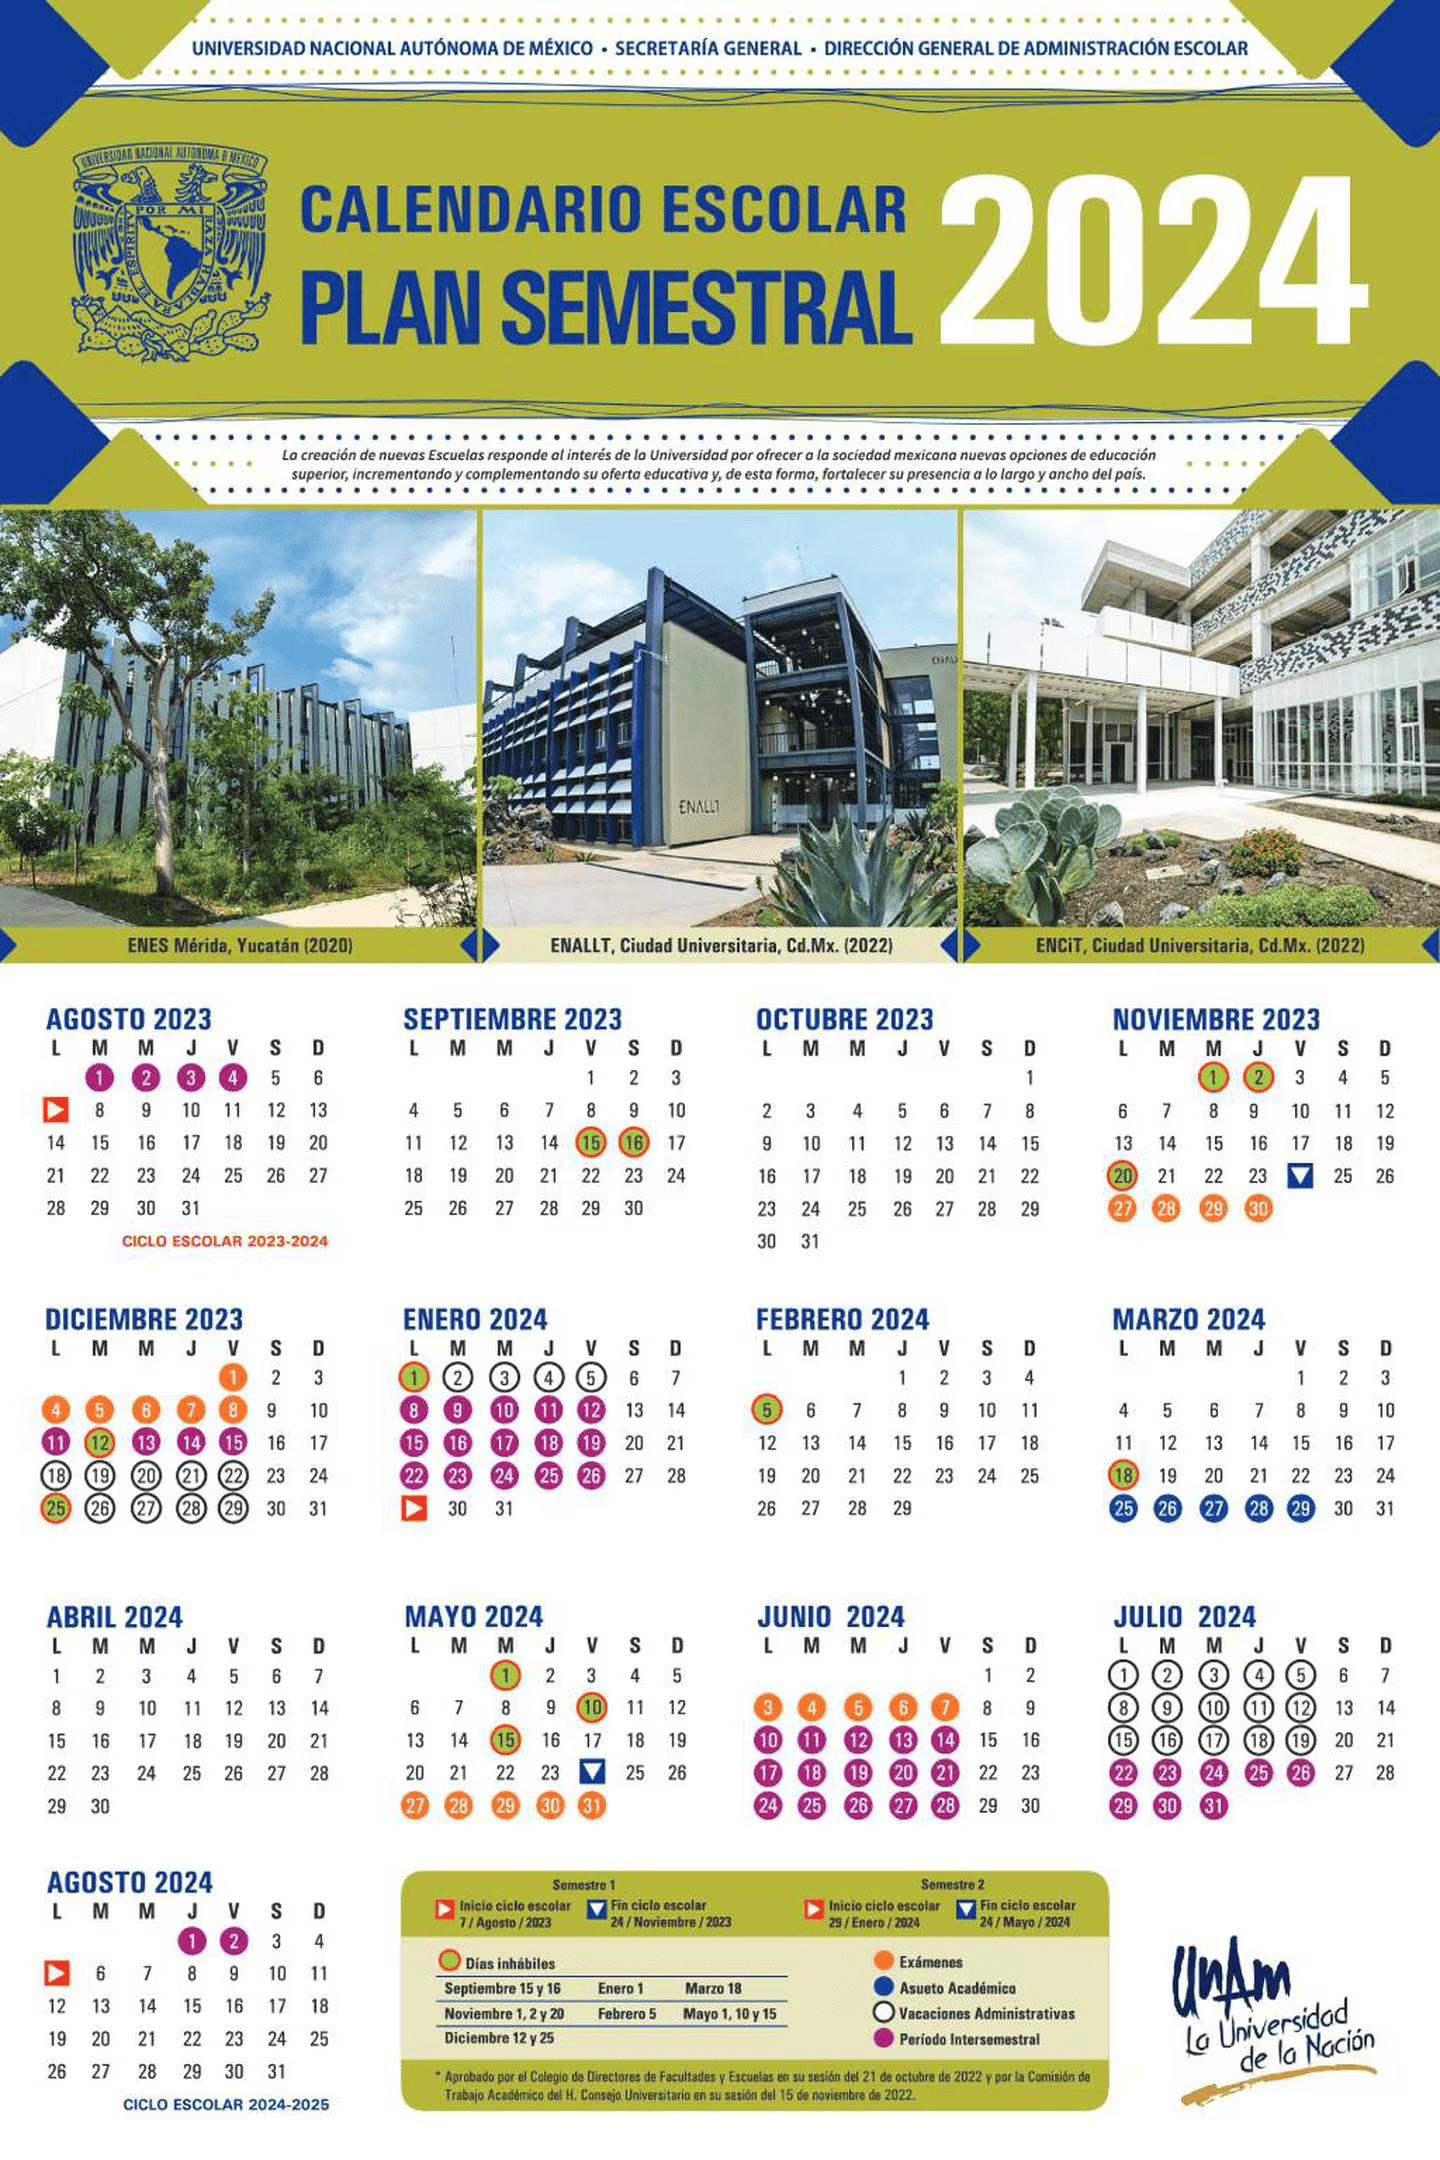 Calendario semestral UNAM 2024.